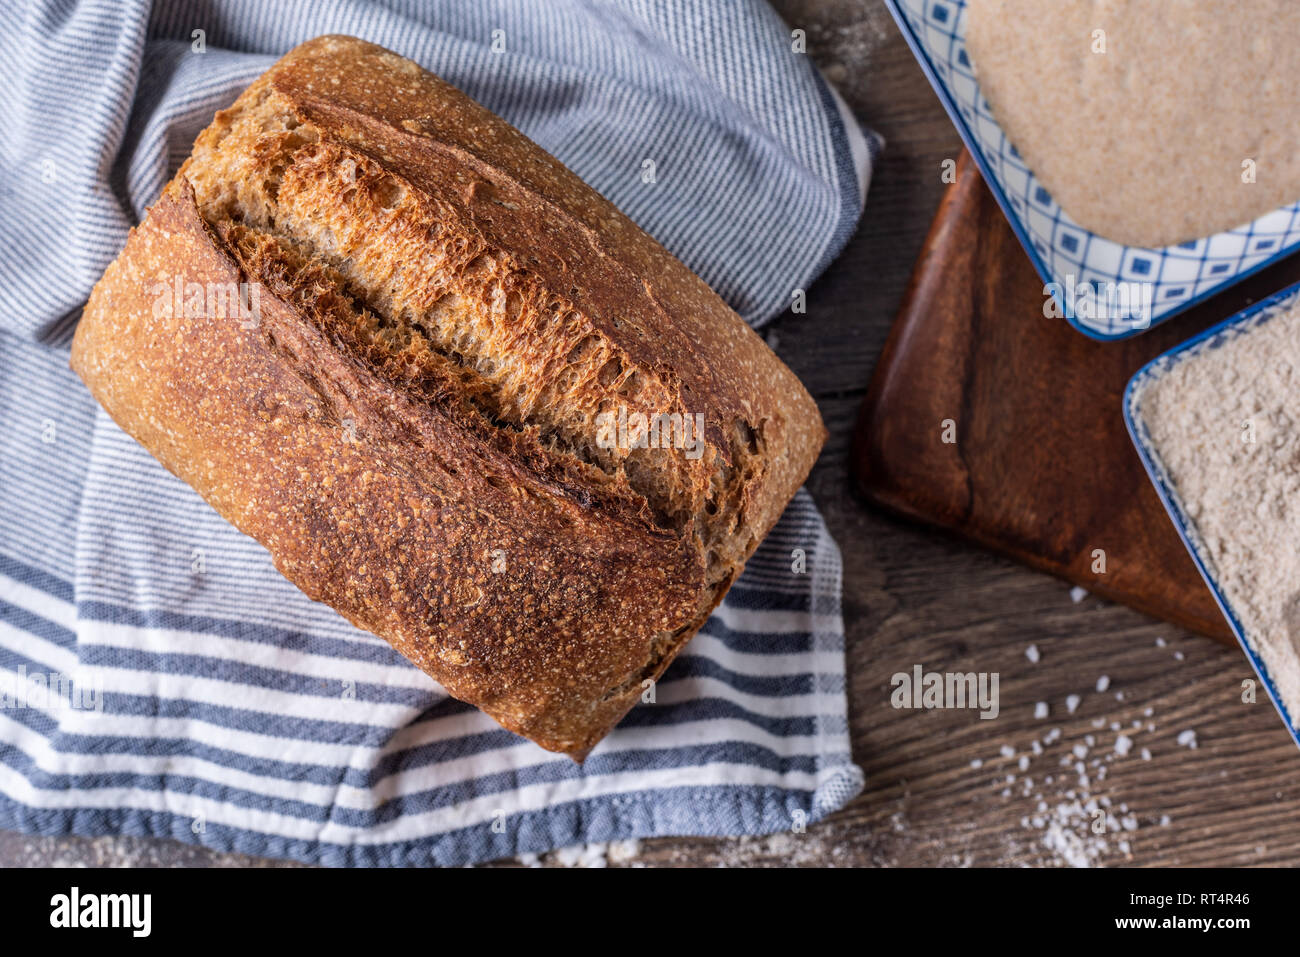 Dulce artesano pan de masa fermentada en el fondo de la tabla de madera Foto de stock